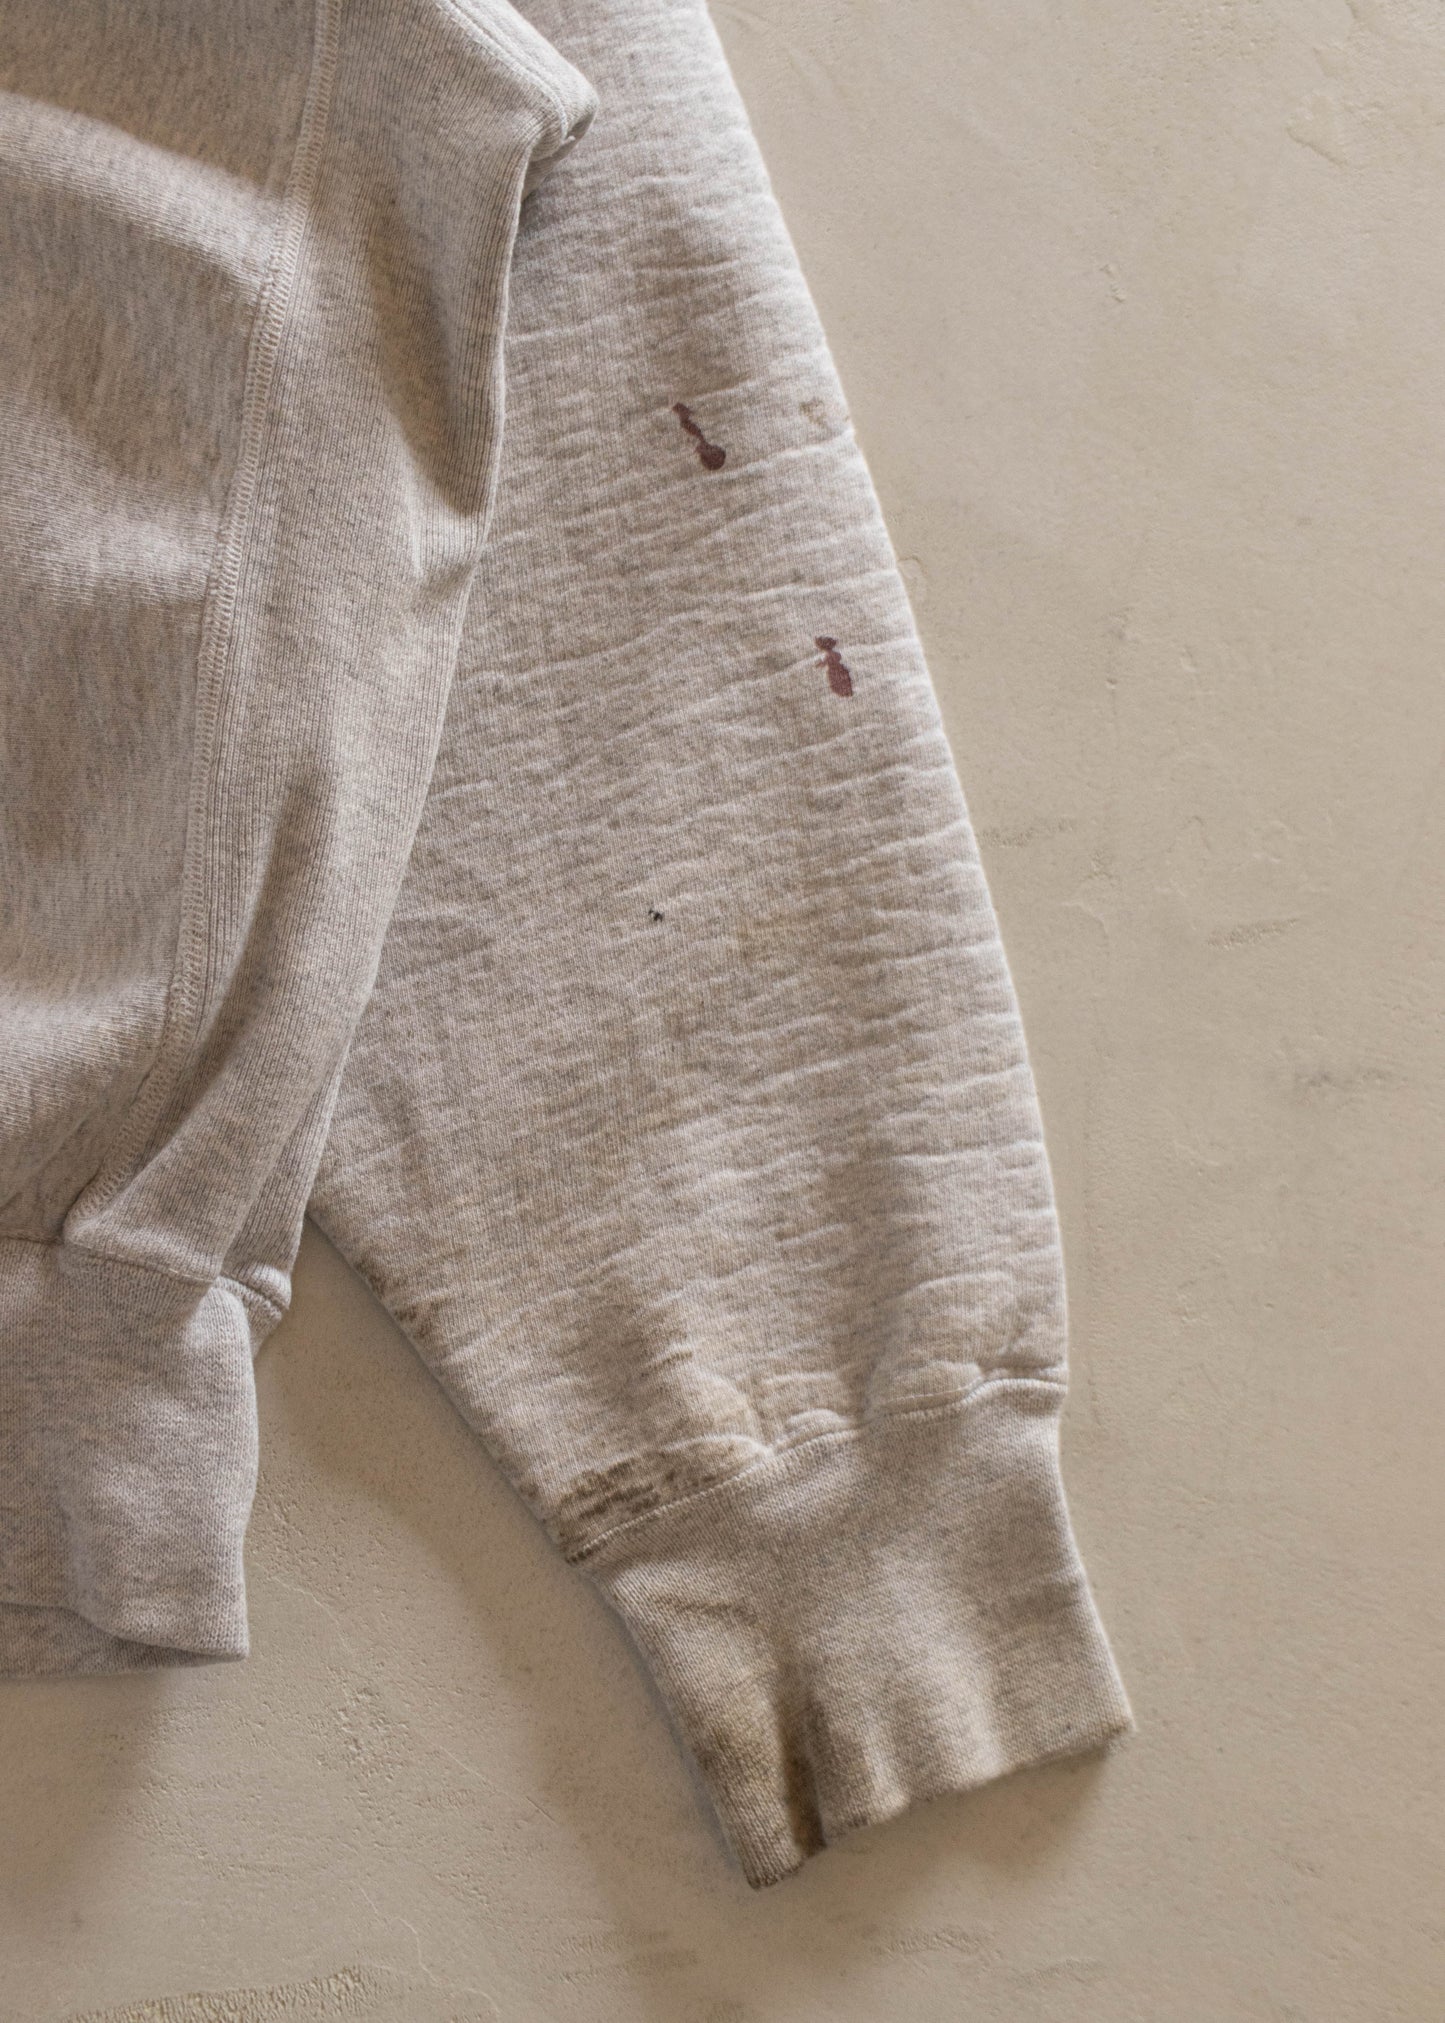 1990s The Cotton Exchange Hershey Bears Reverse Weave Sweatshirt Size M/L